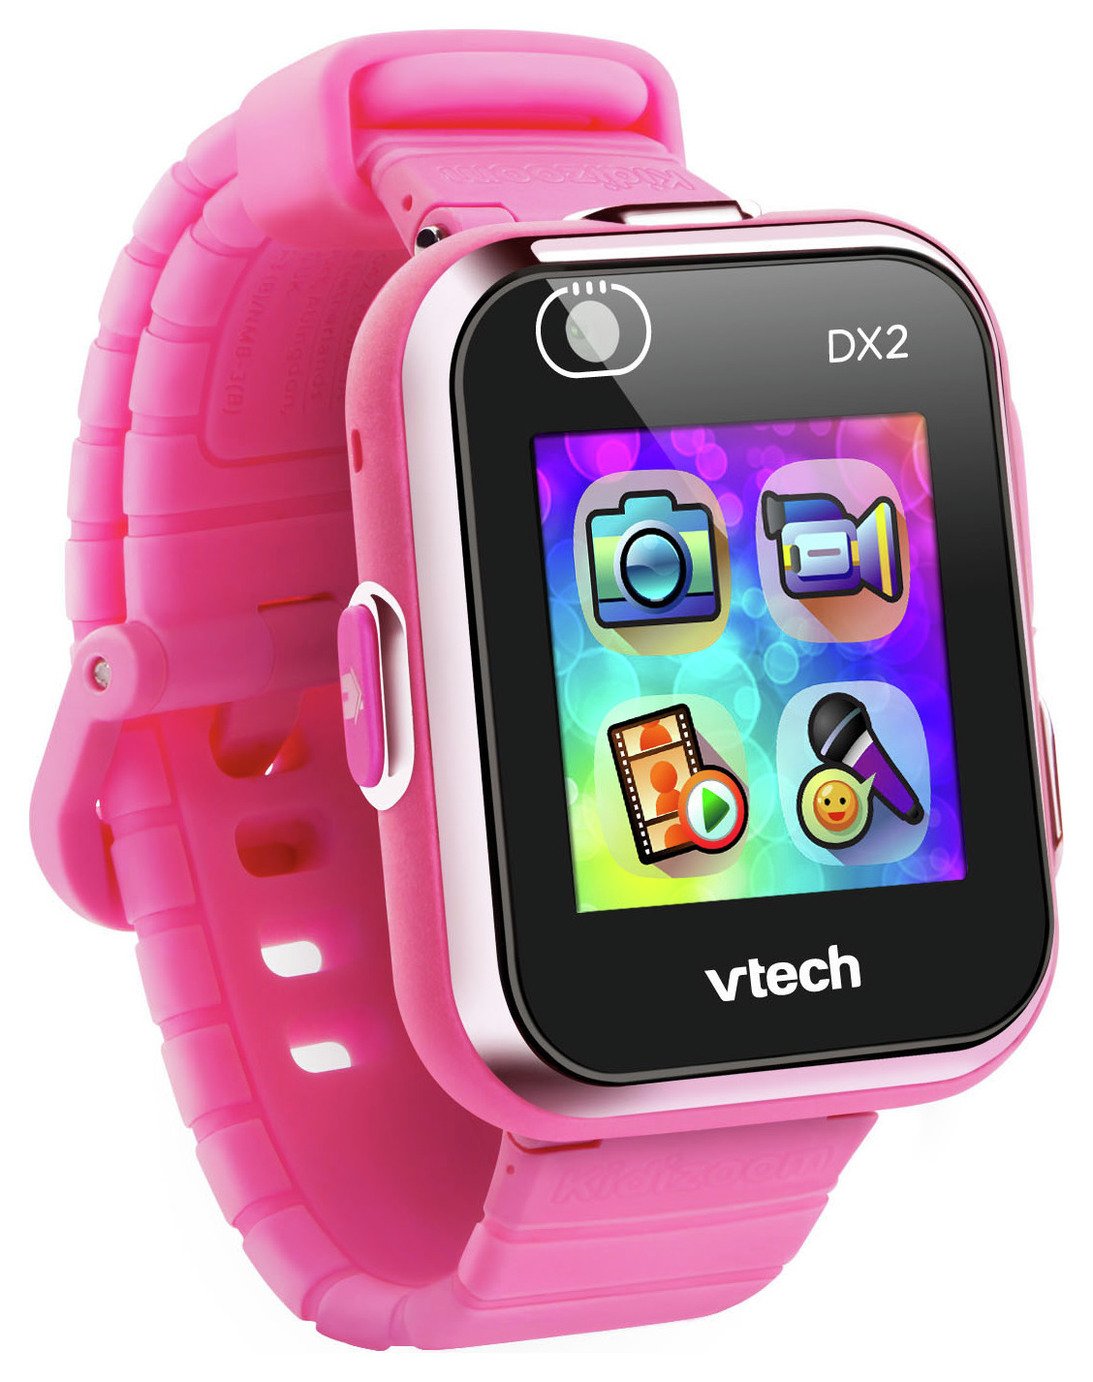 VTech Kidizoom Dual Camera Smart Watch - Pink